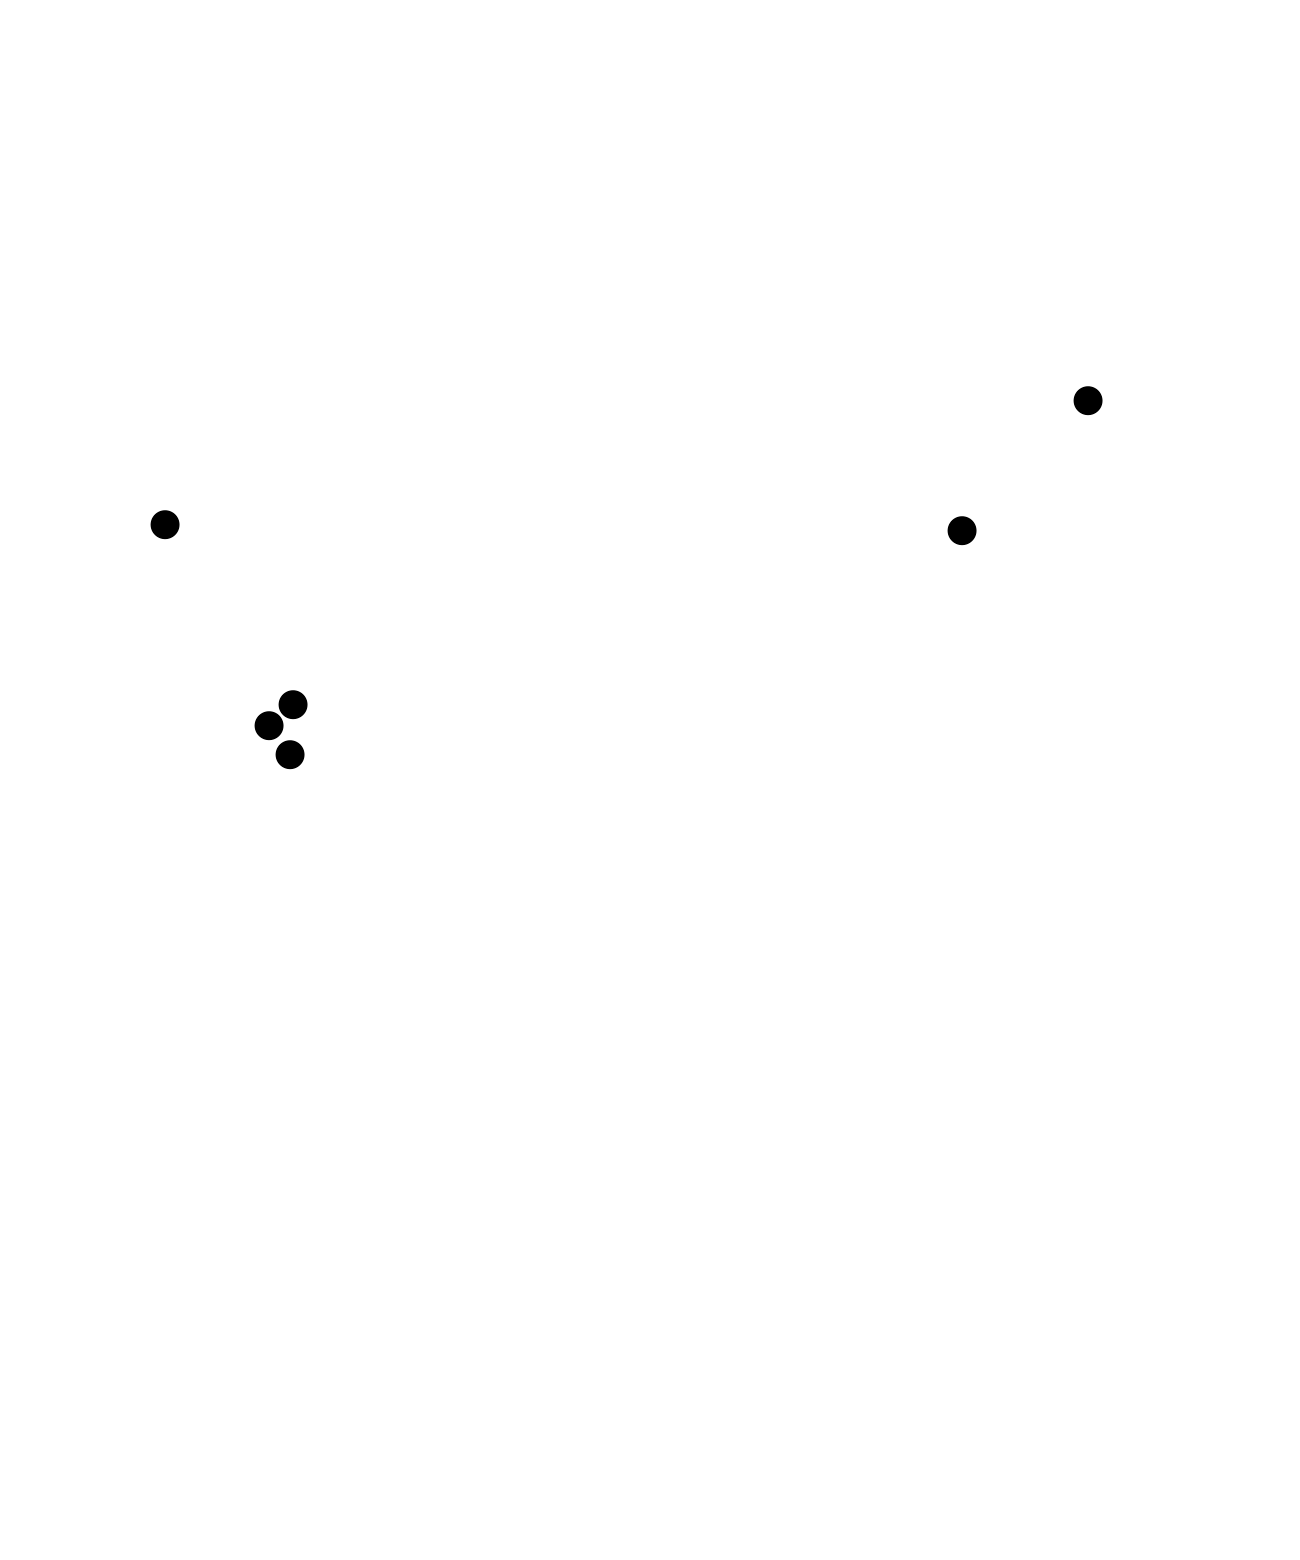 north america white map